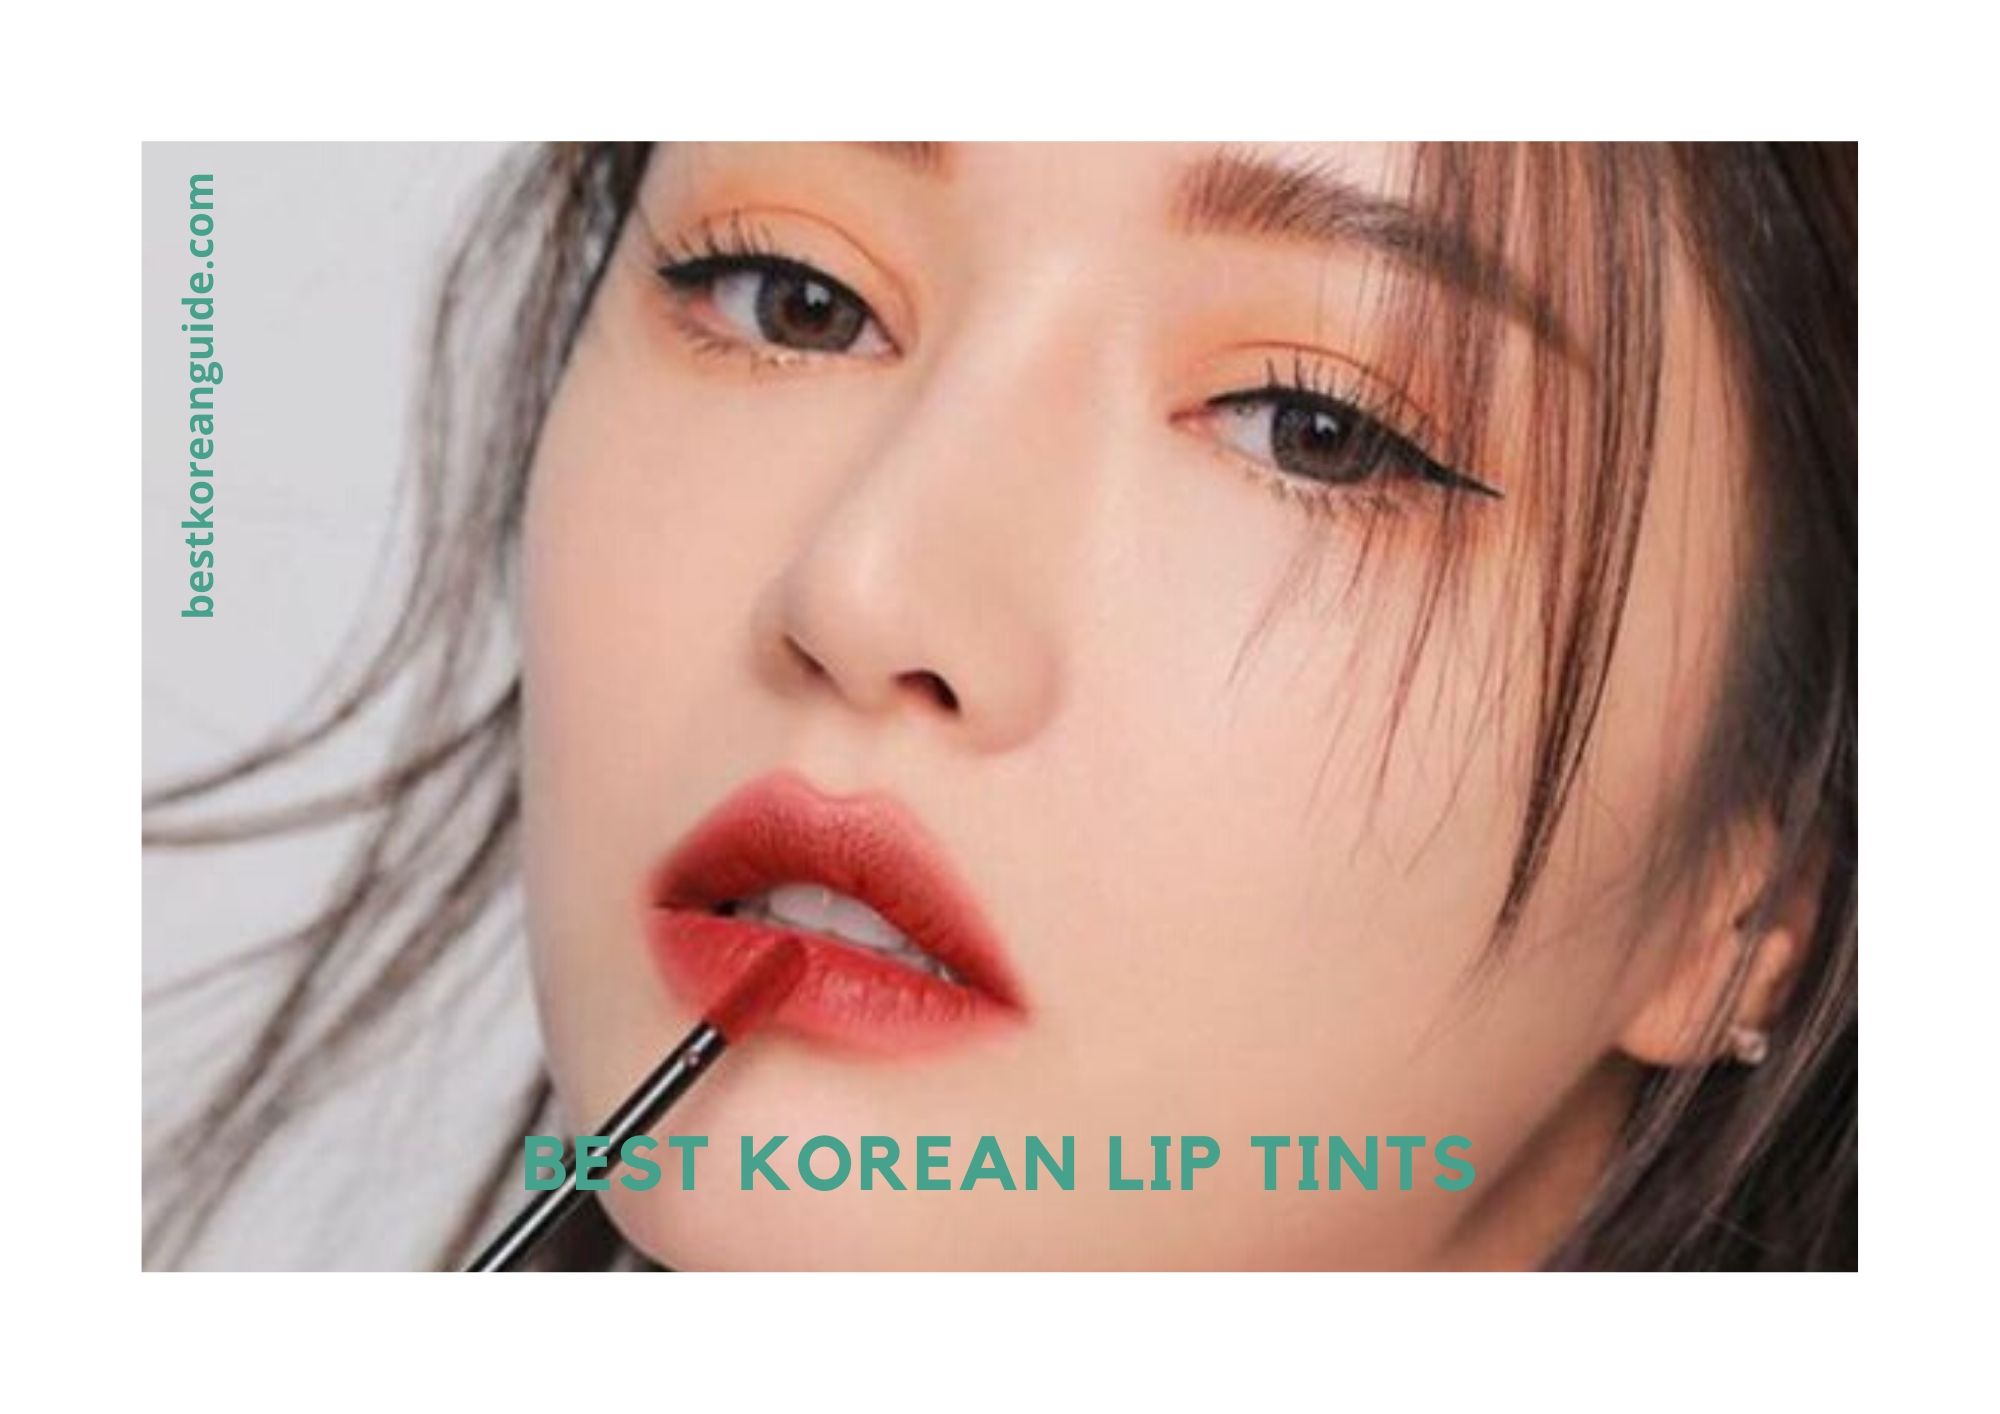 Summary for Korean Lip Tints Buyers